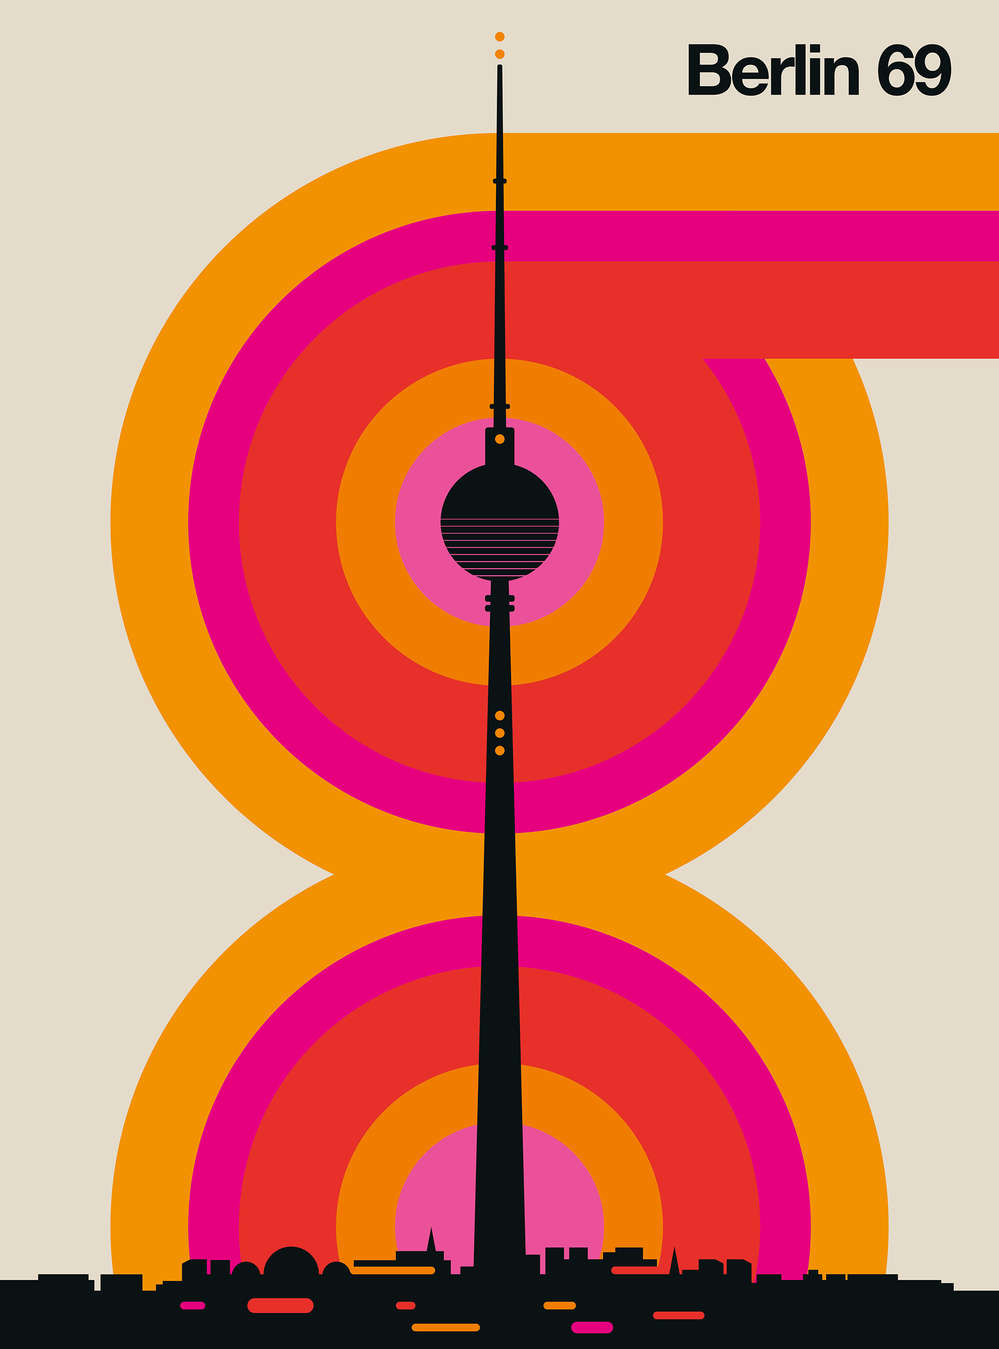             Carta da parati della torre radiofonica di Berlino in design retrò anni '60
        